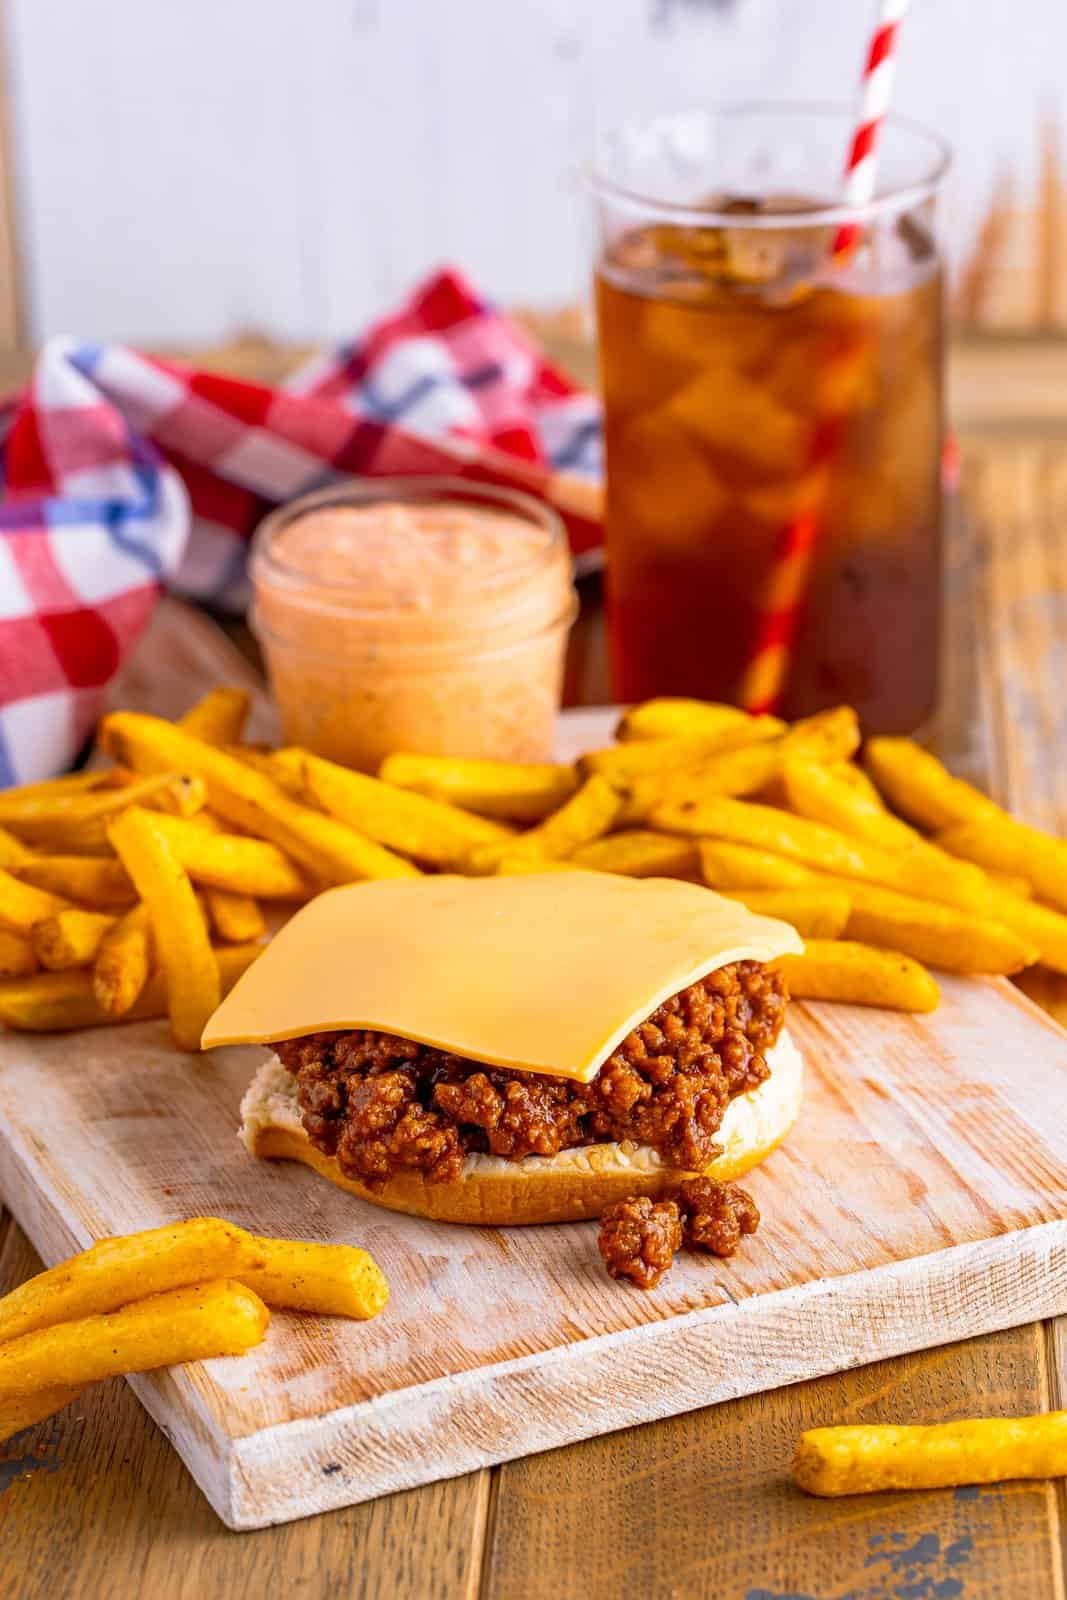 The start of a Big Mac Sloppy Joe sandwich with french fries.